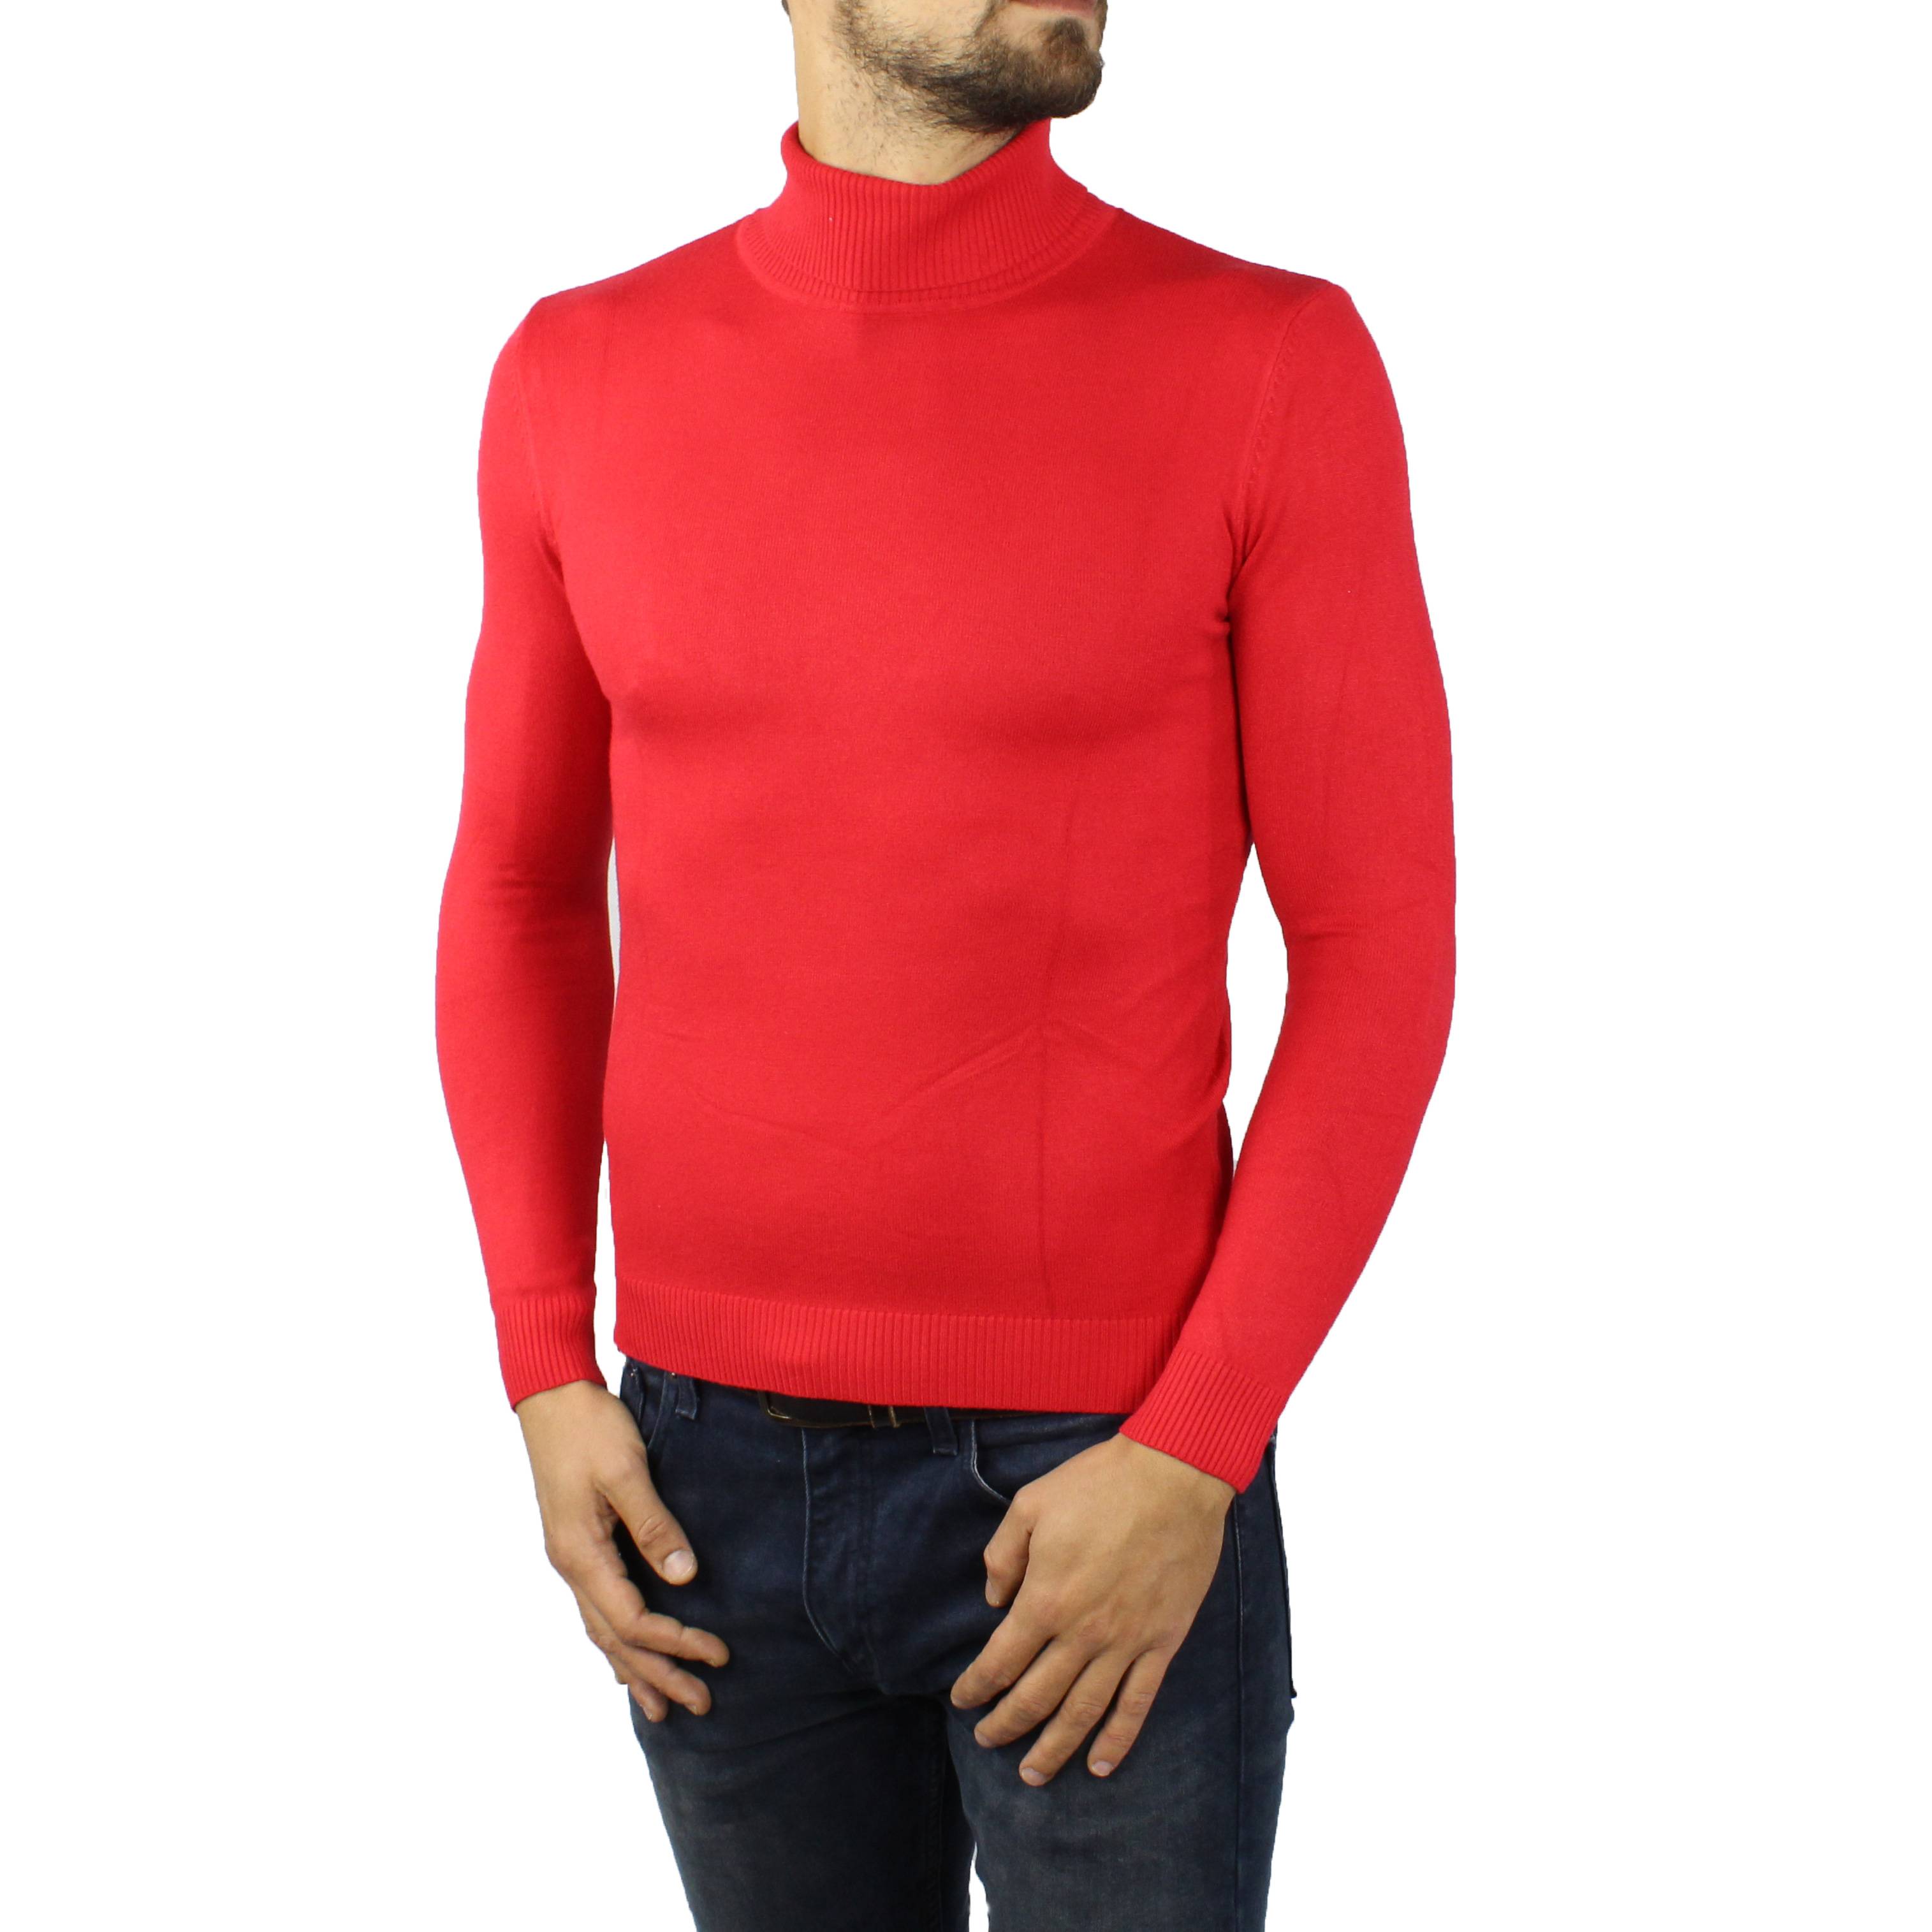 Man Jersey Turtleneck Cashmere Sweater Turtleneck Red Sweater M L XL ...